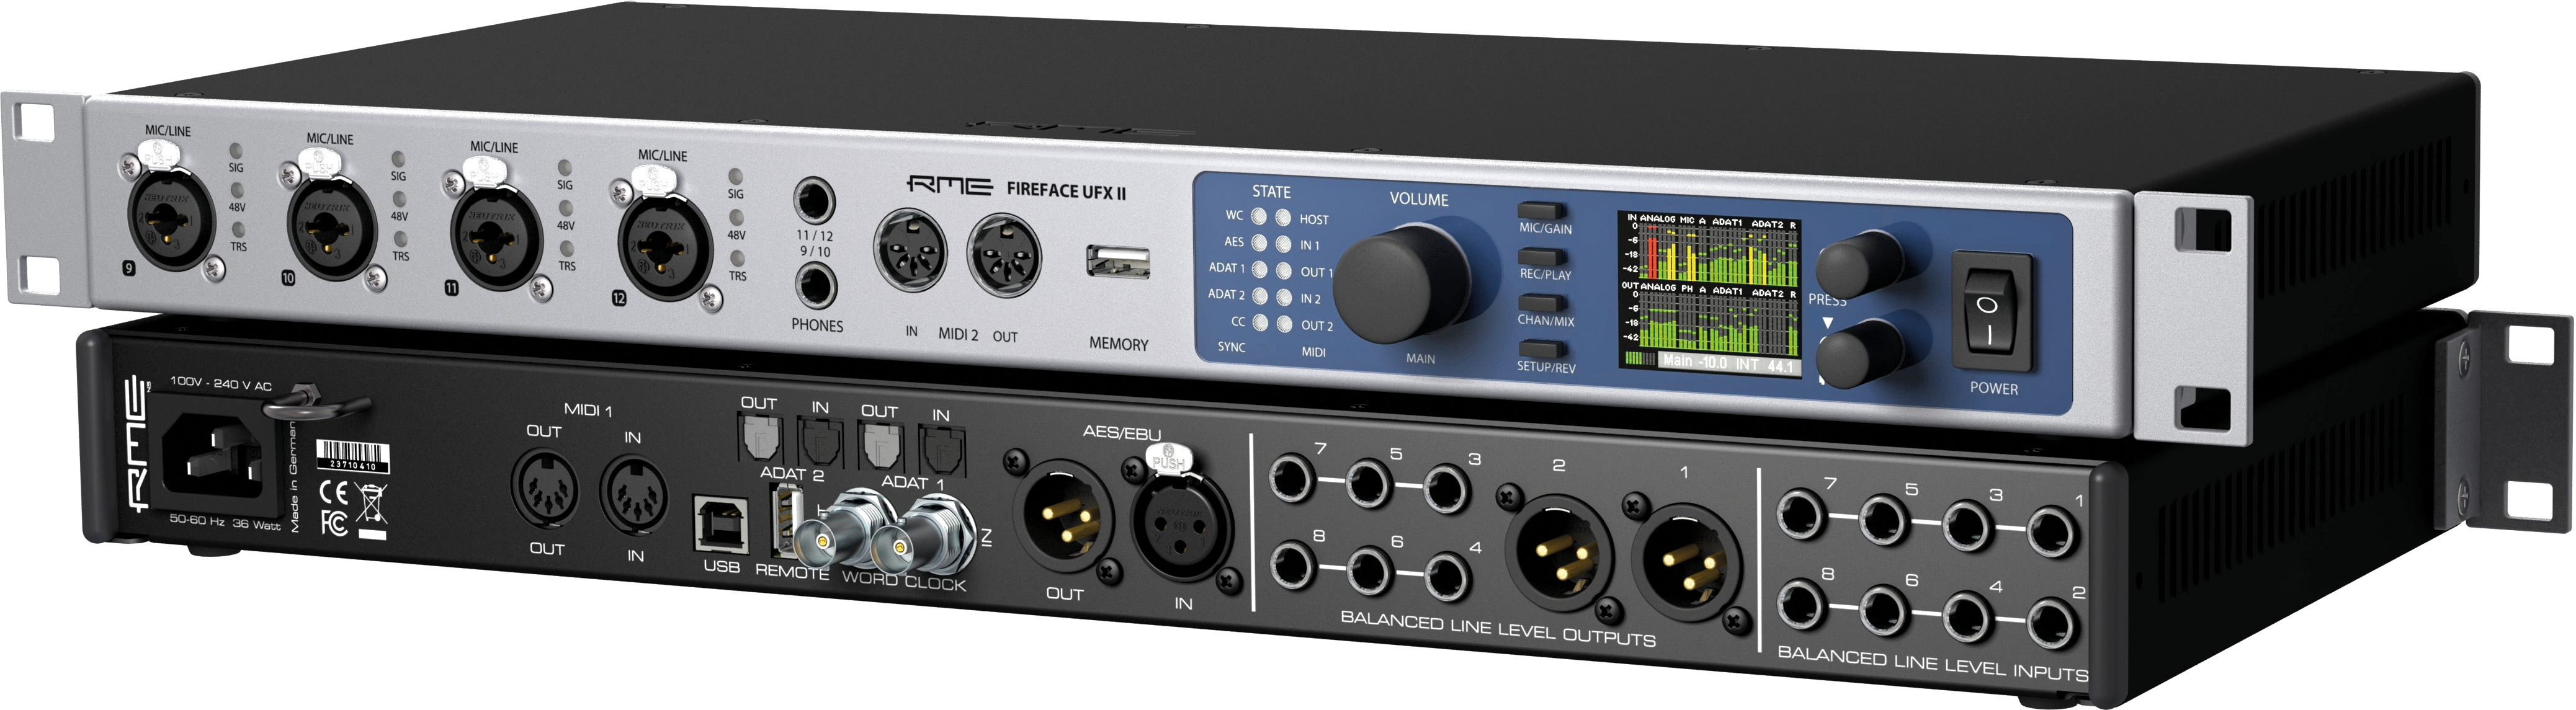 RME Fireface UFX II - Interfaces - Professional Audio Design, Inc